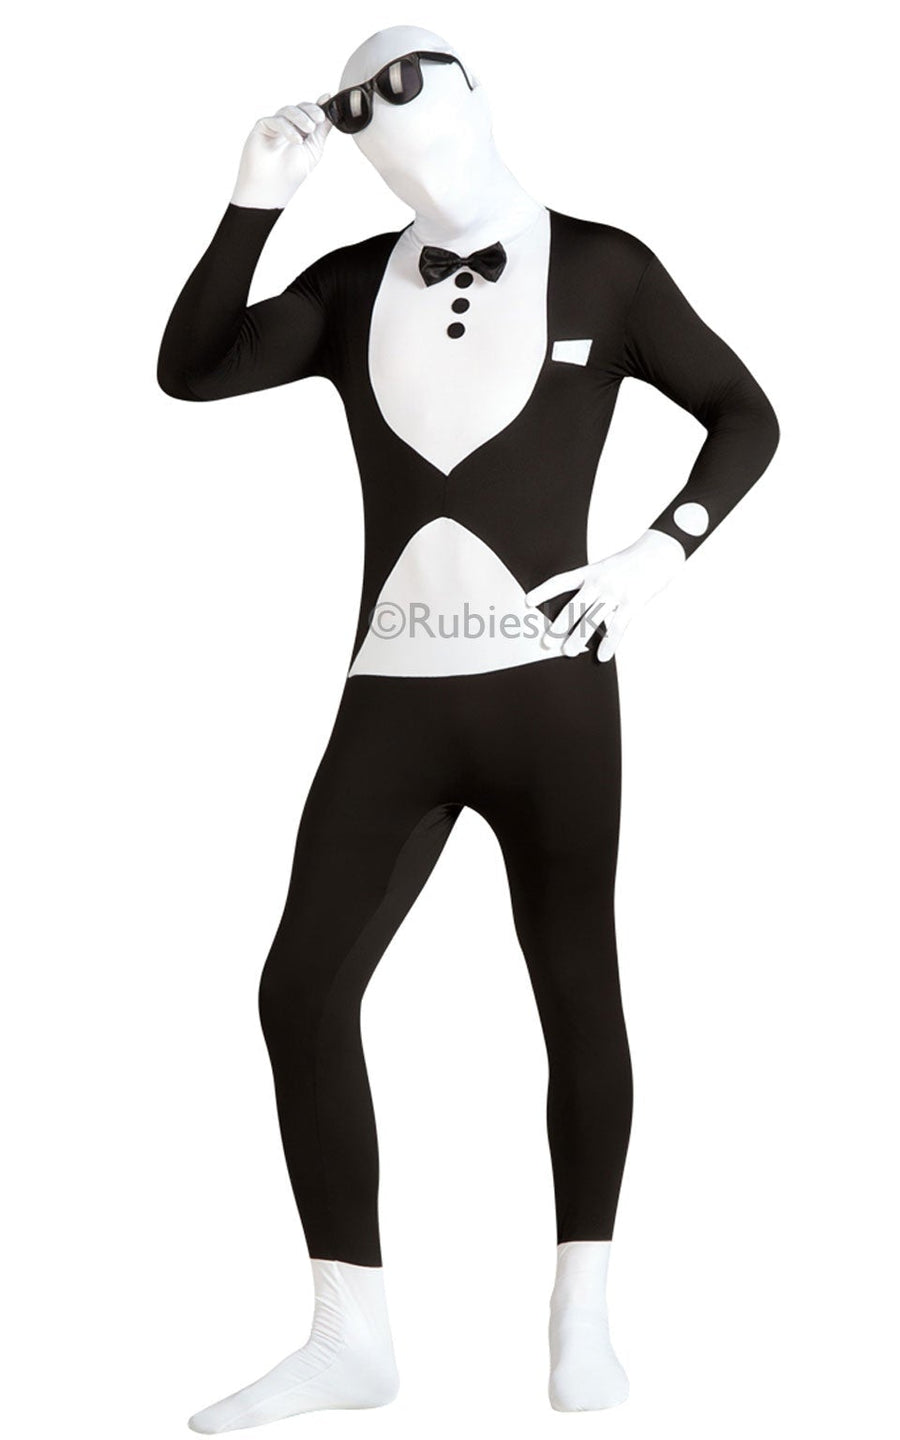 Tuxedo 2nd Skin Suit Costume_1 rub-880518XL